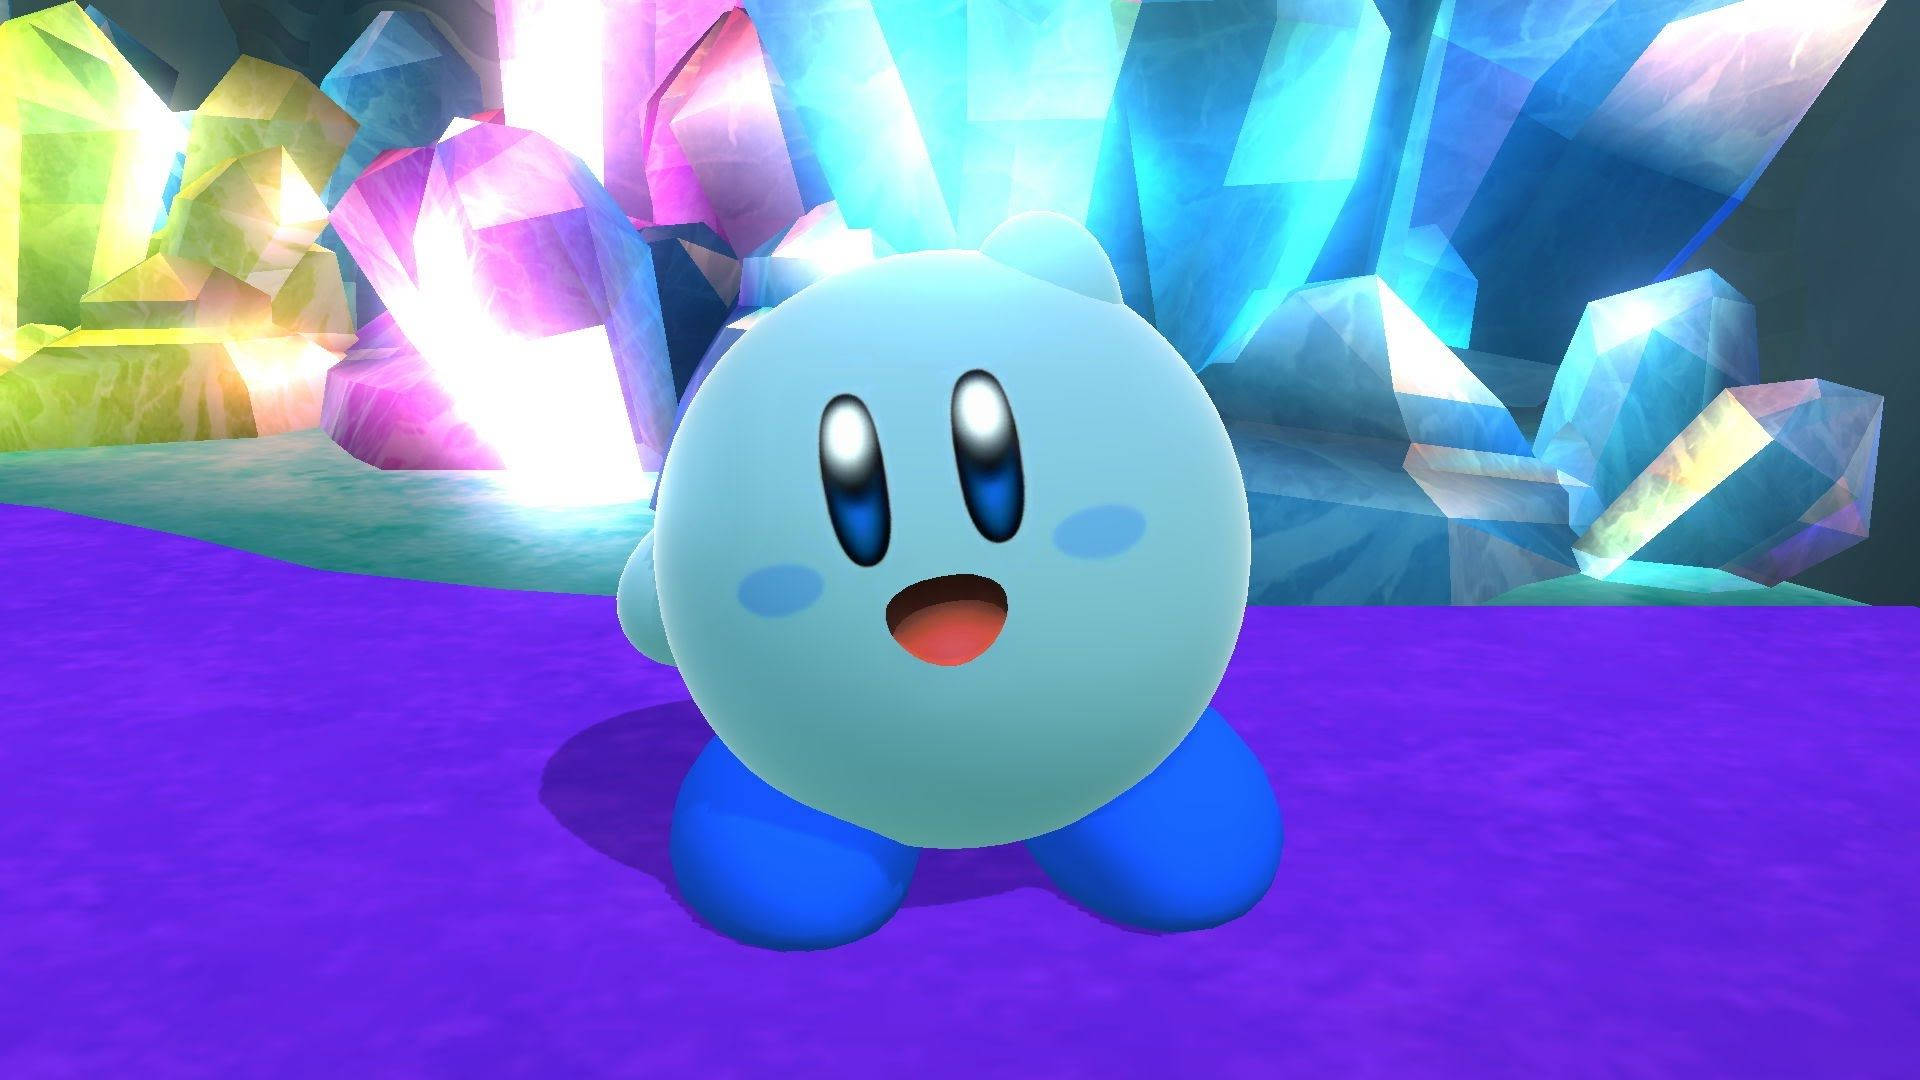 An amazing HD wallpaper of cute blue Kirby